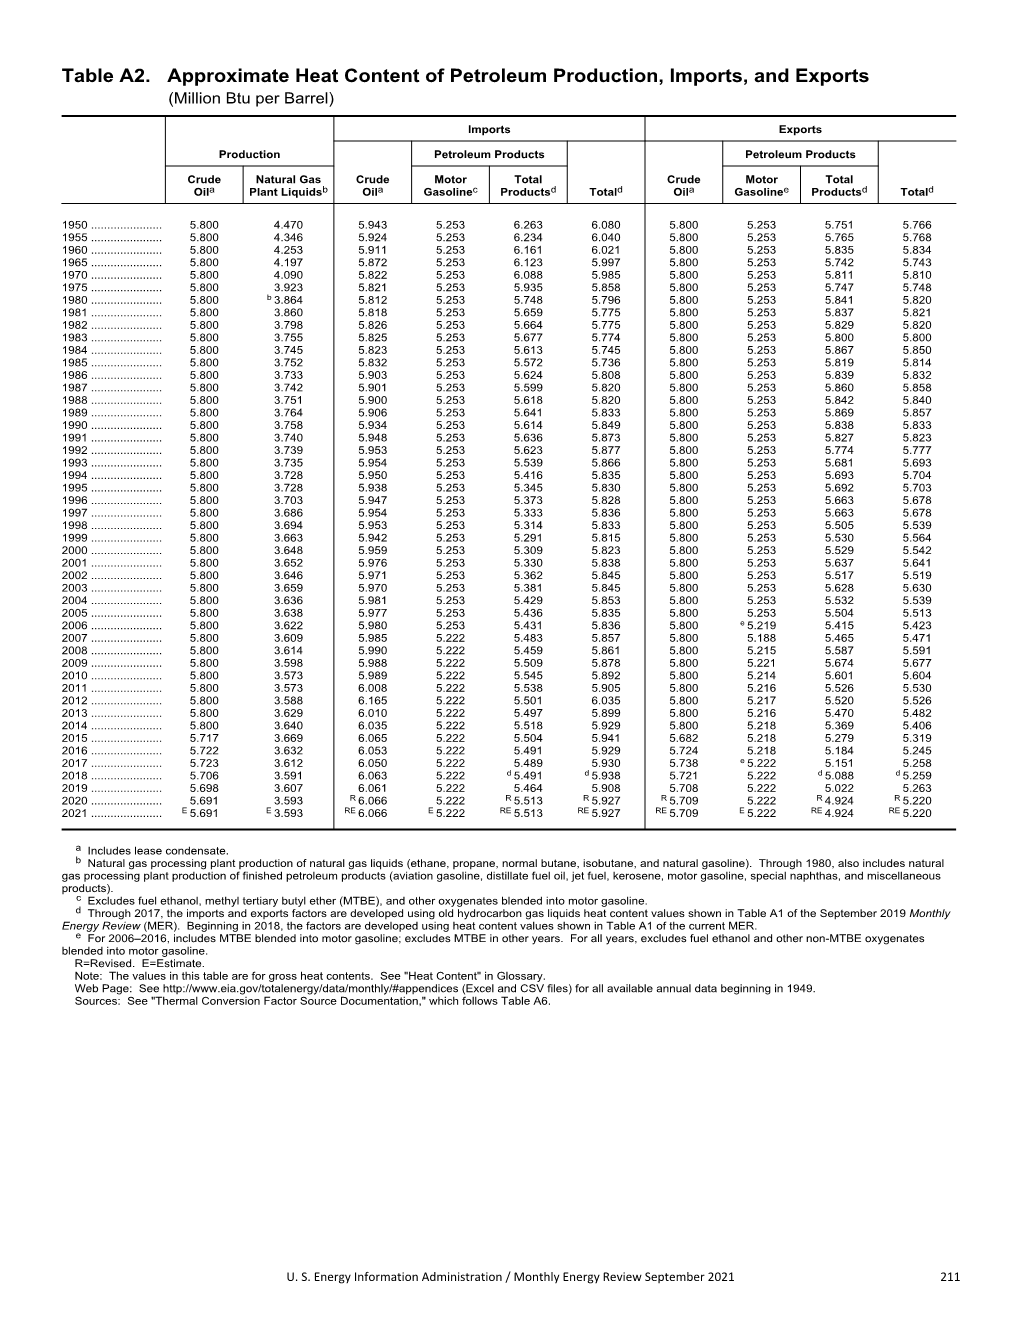 Table A2. Approximate Heat Content of Petroleum Production, Imports, and Exports (Million Btu Per Barrel)